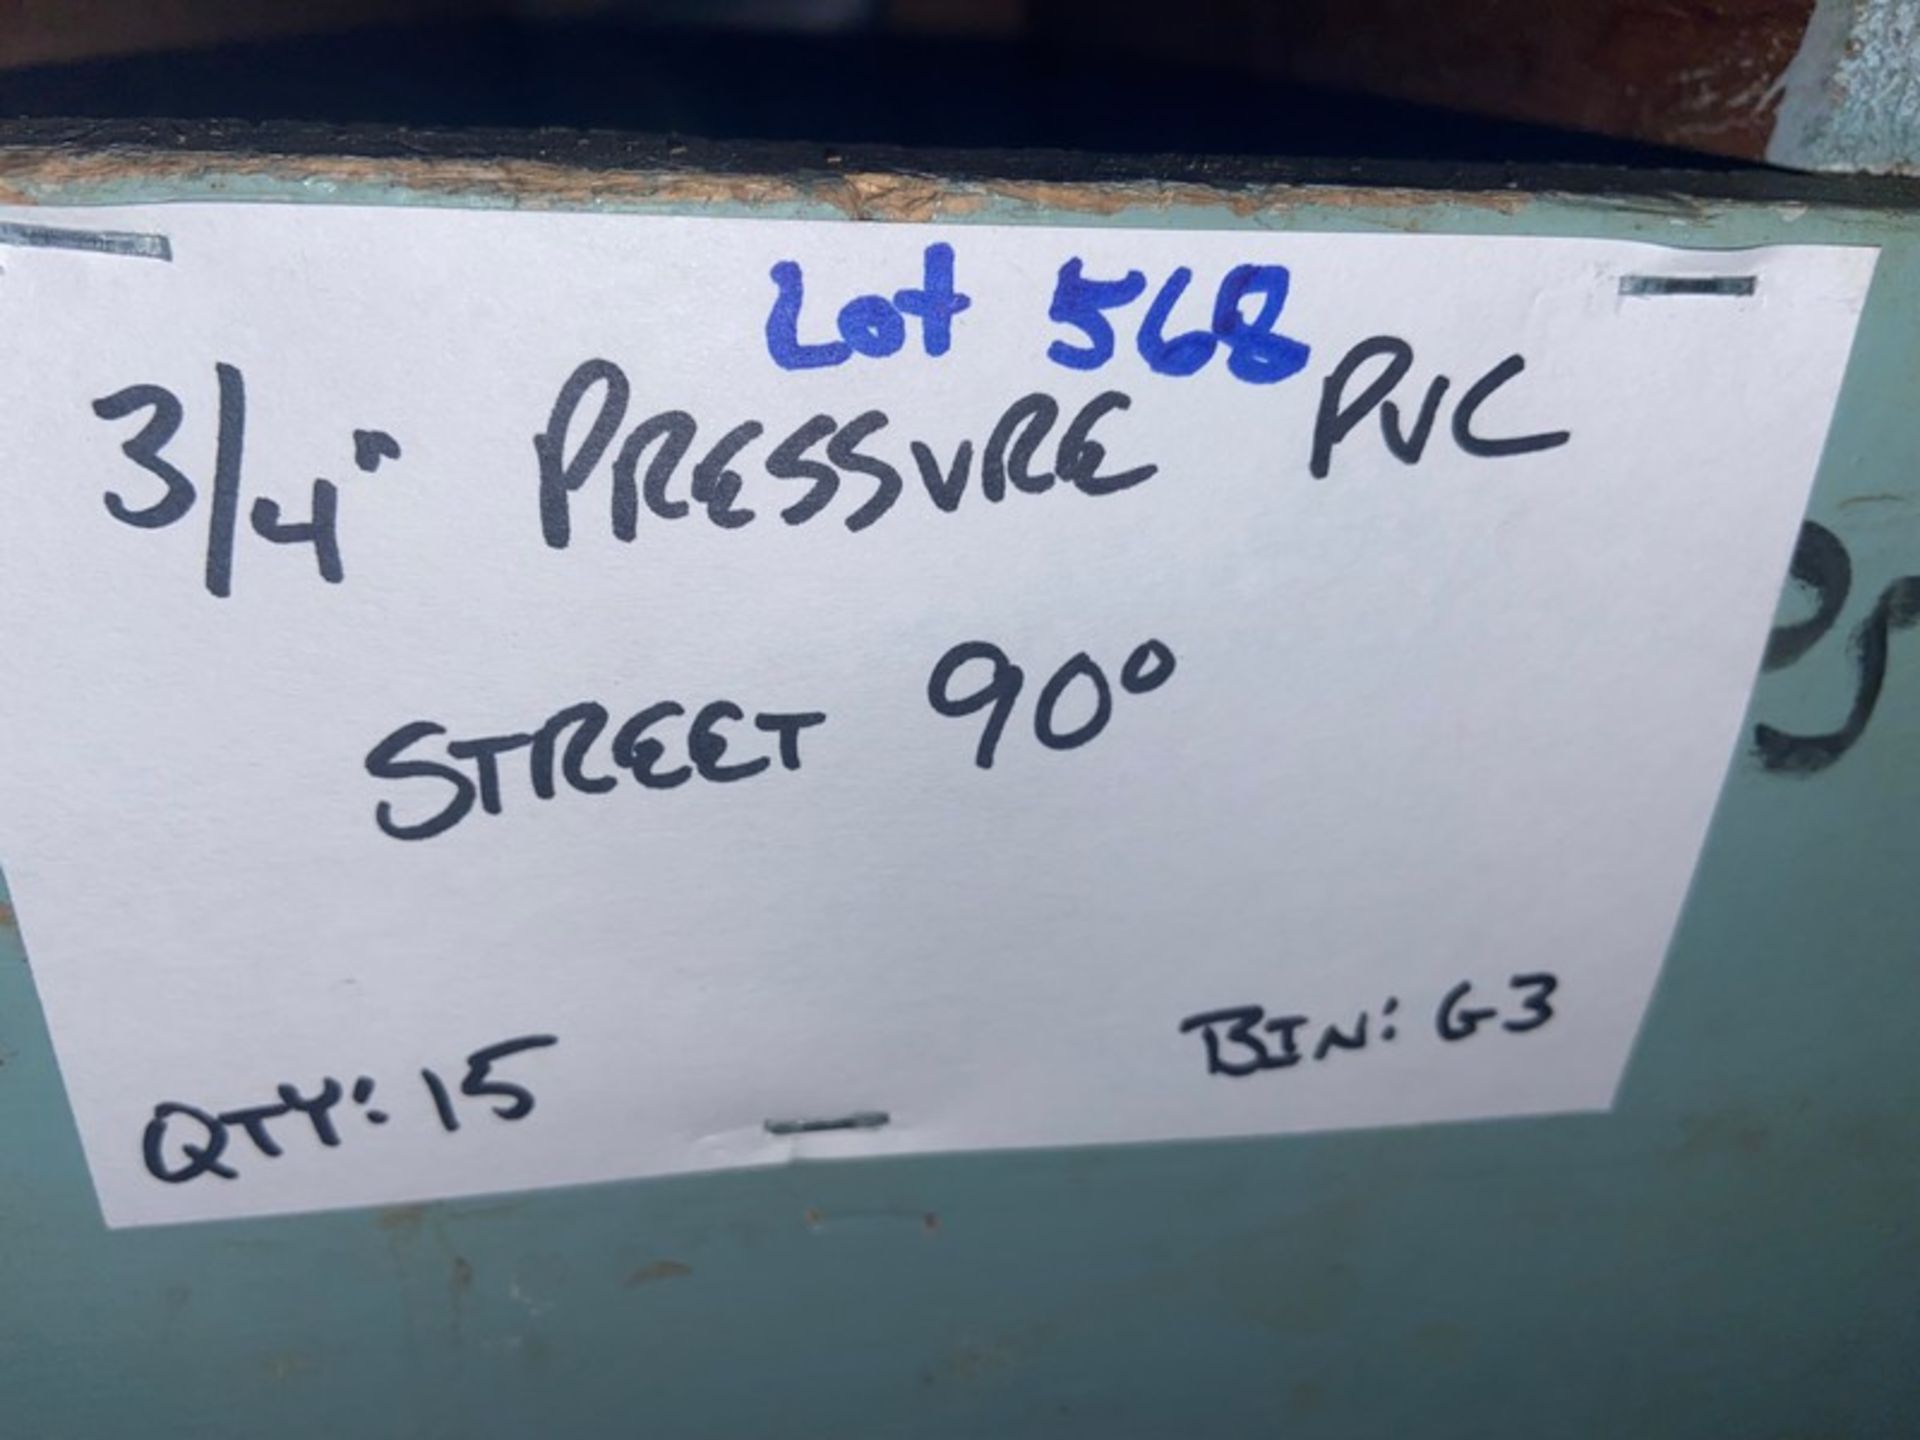 (15) 3/4” Pressure PVC Stree5 (Bin:G3), Includes (48) 3/4” Pressure PVC 45’ (Bin:G3) (LOCATED IN - Image 7 of 8